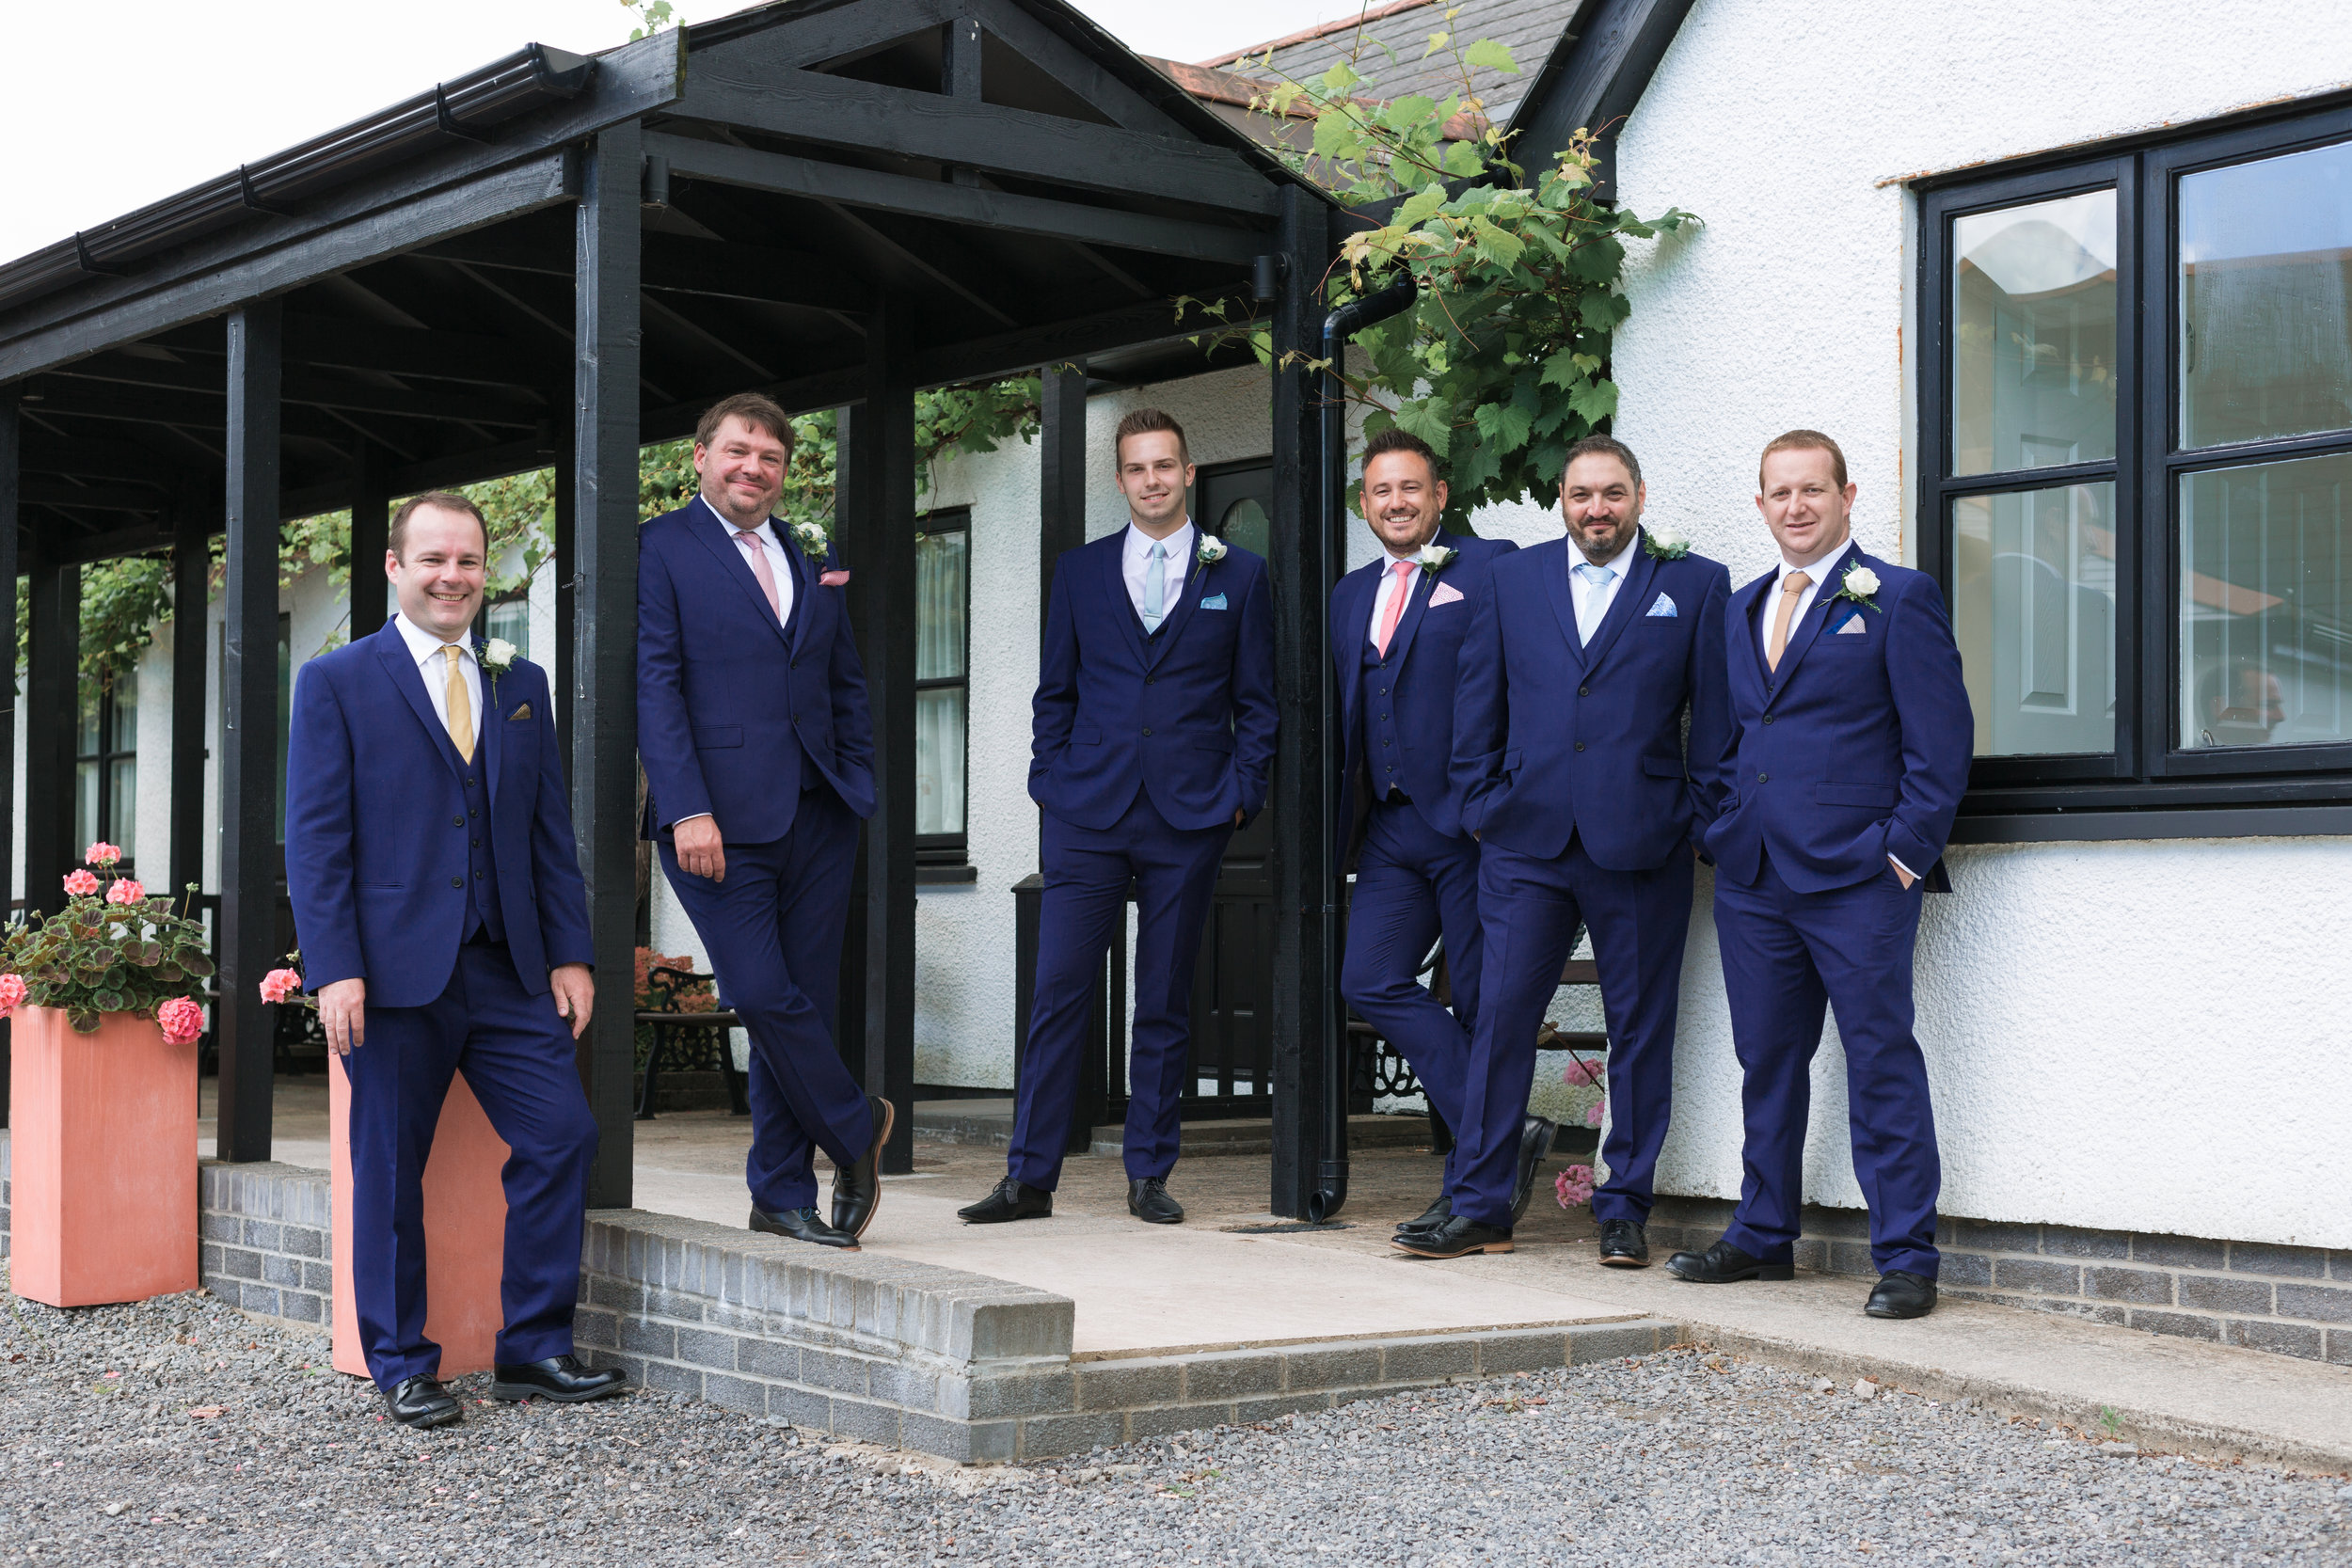 Groomsmen at Llanerch Vineyard. wedding photographer llanerch vineyard